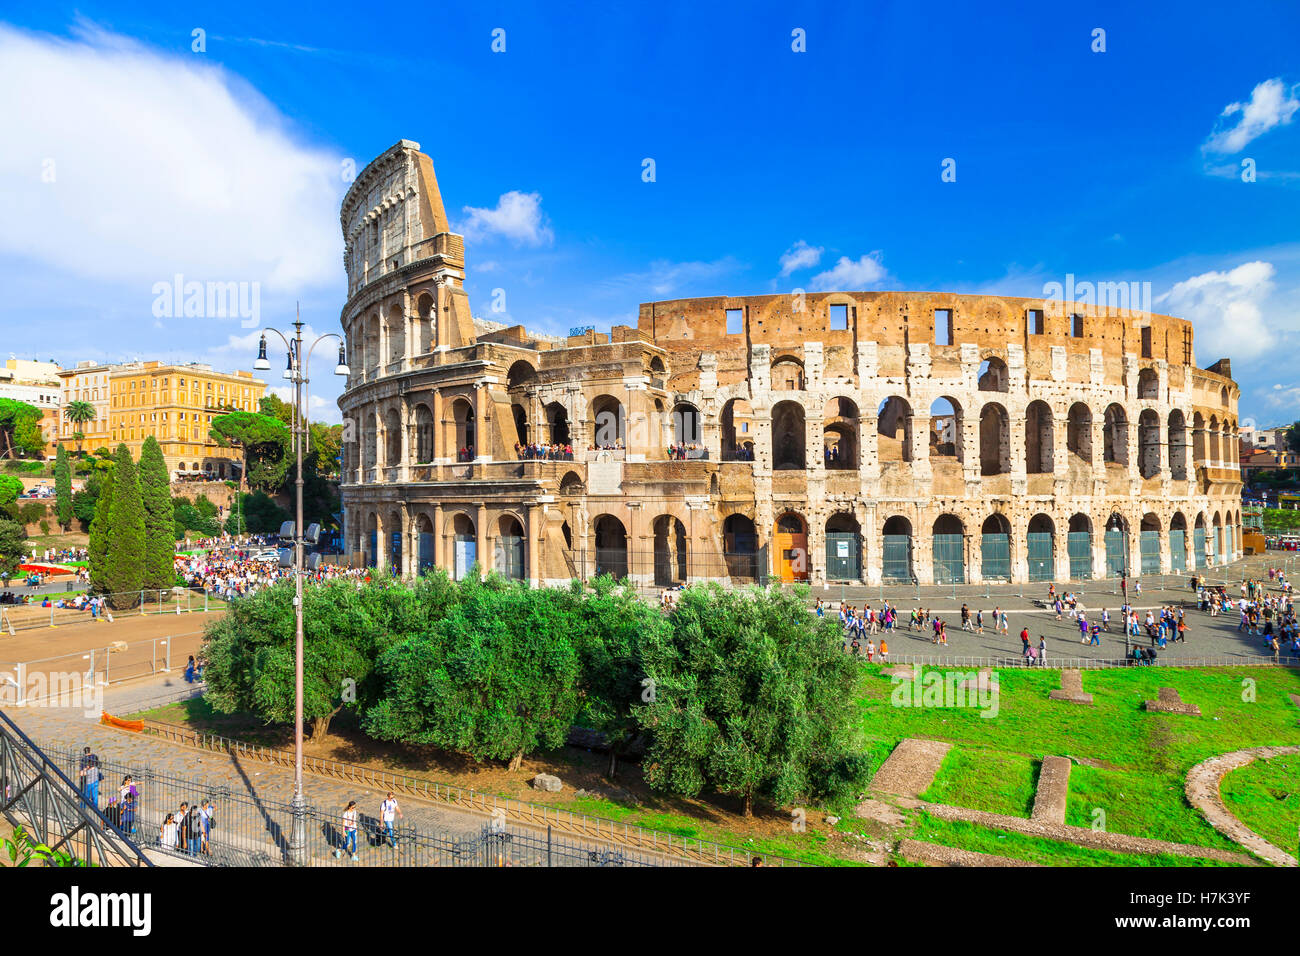 Greatest Italian landmark - Colosseum Stock Photo